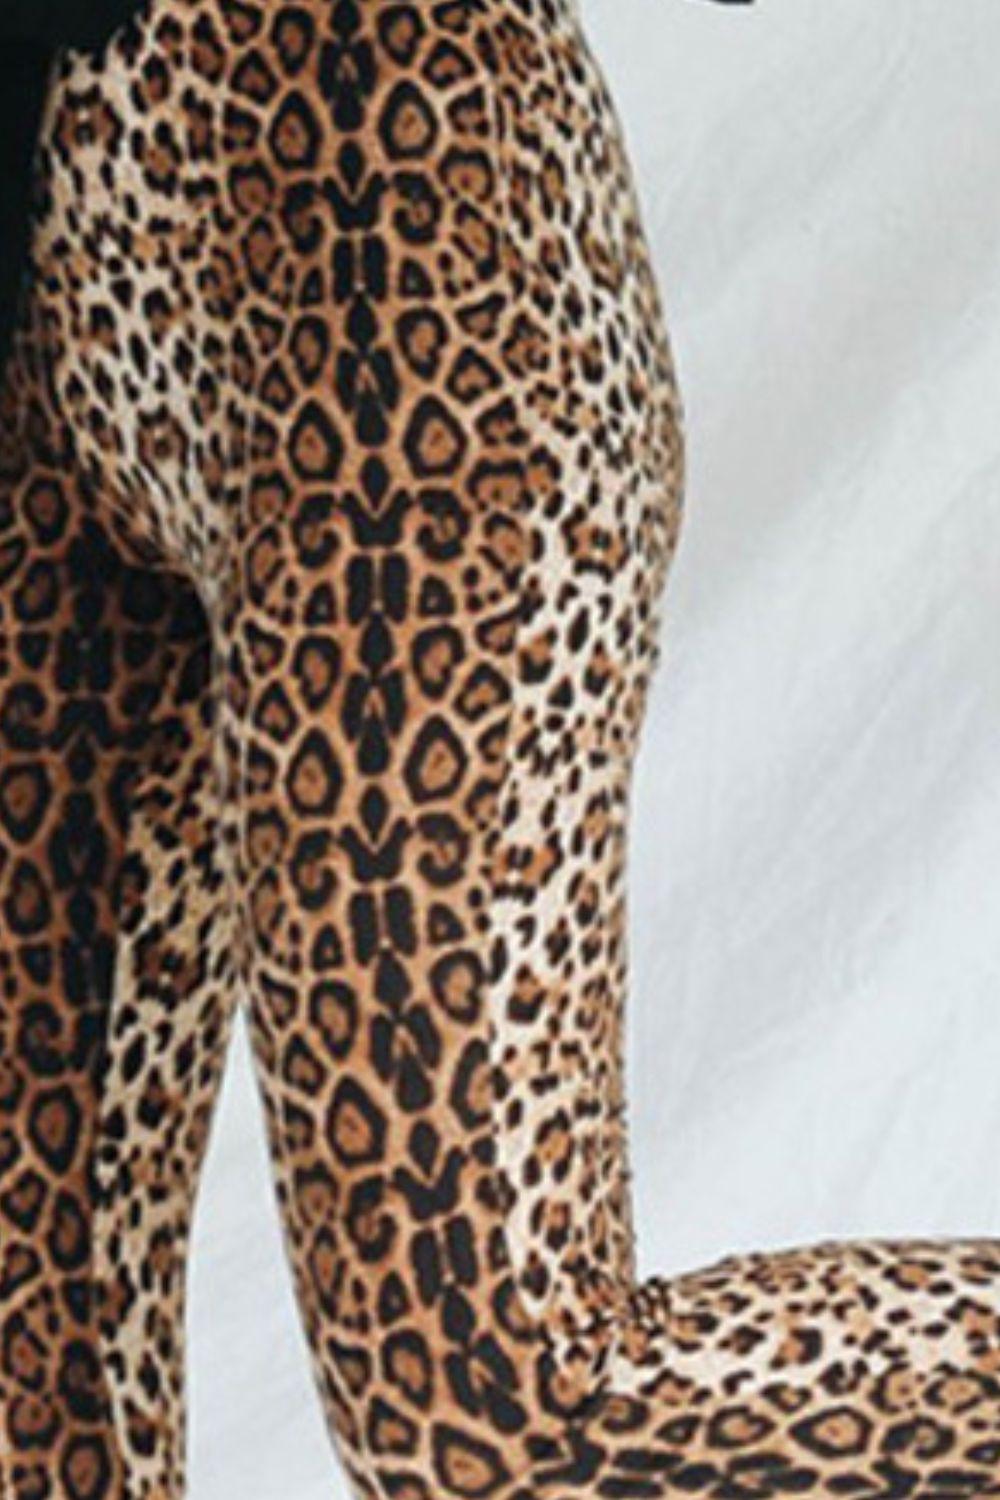 Leopard Print Flare Leg Pants BLUE ZONE PLANET